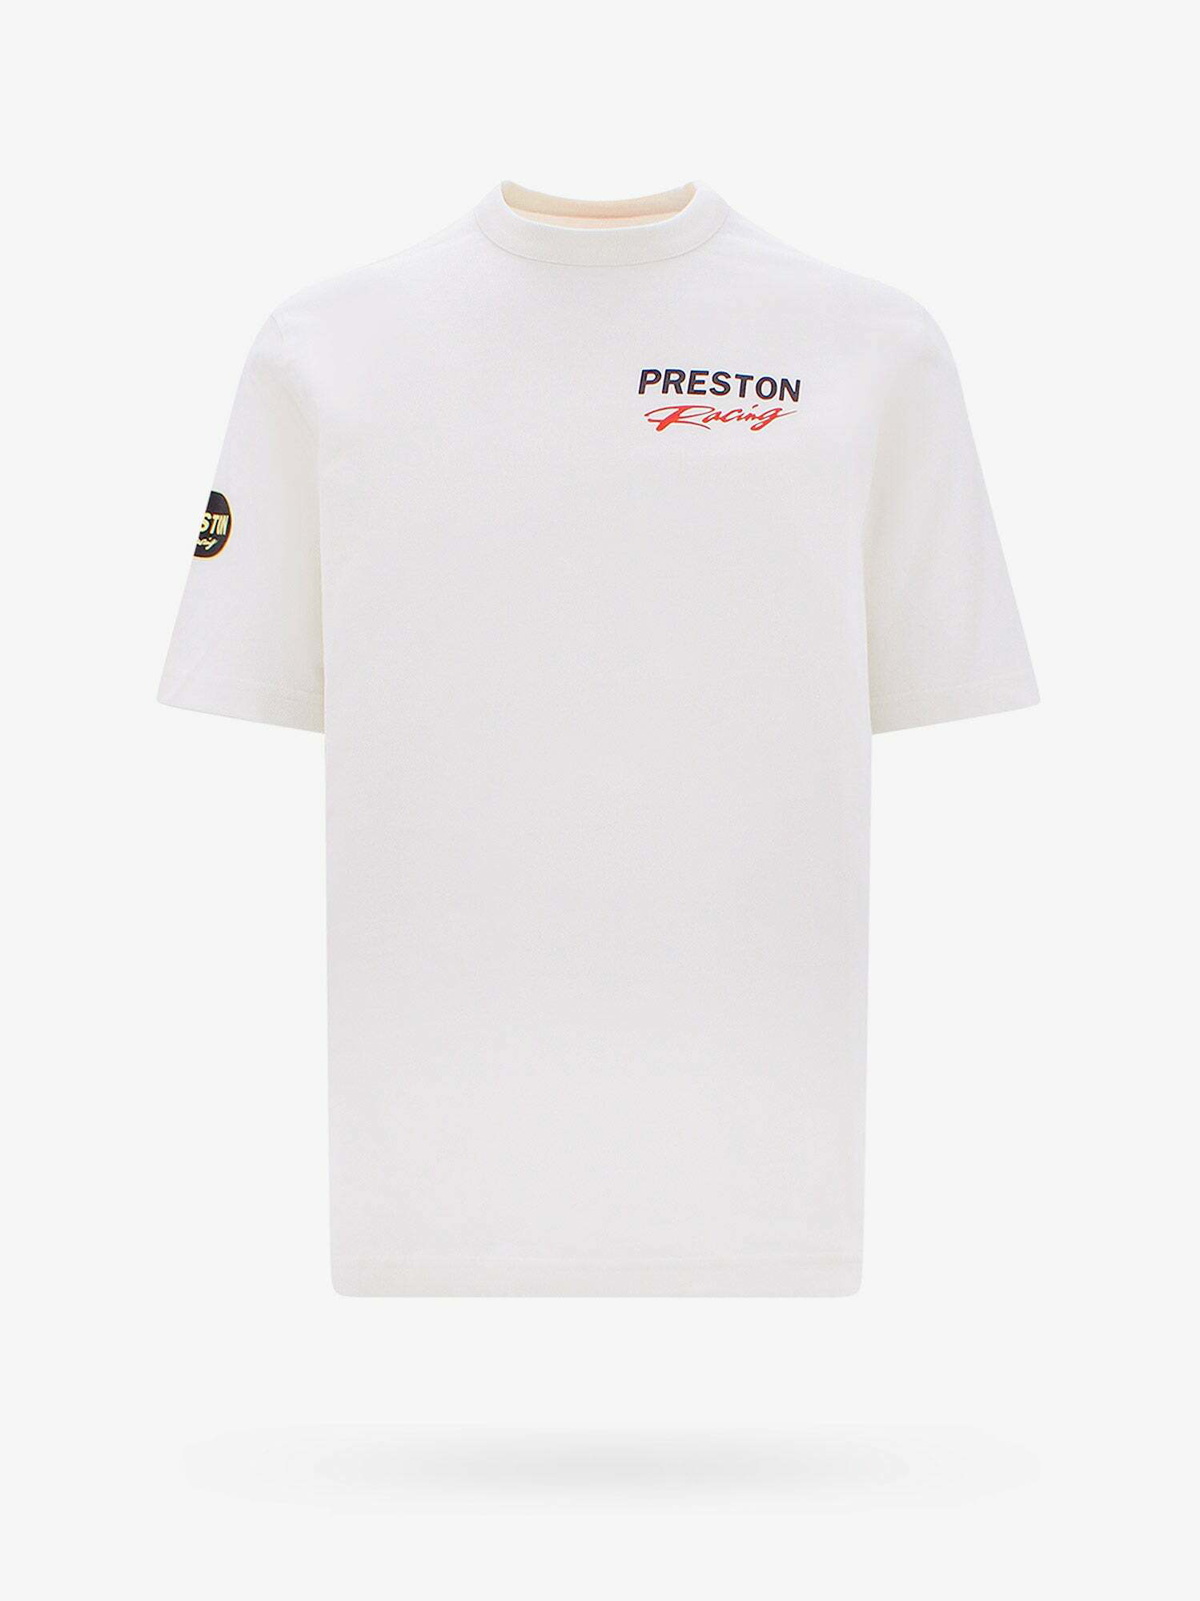 Heron Preston S.t.f.u Printed Crewneck T-shirt in White for Men